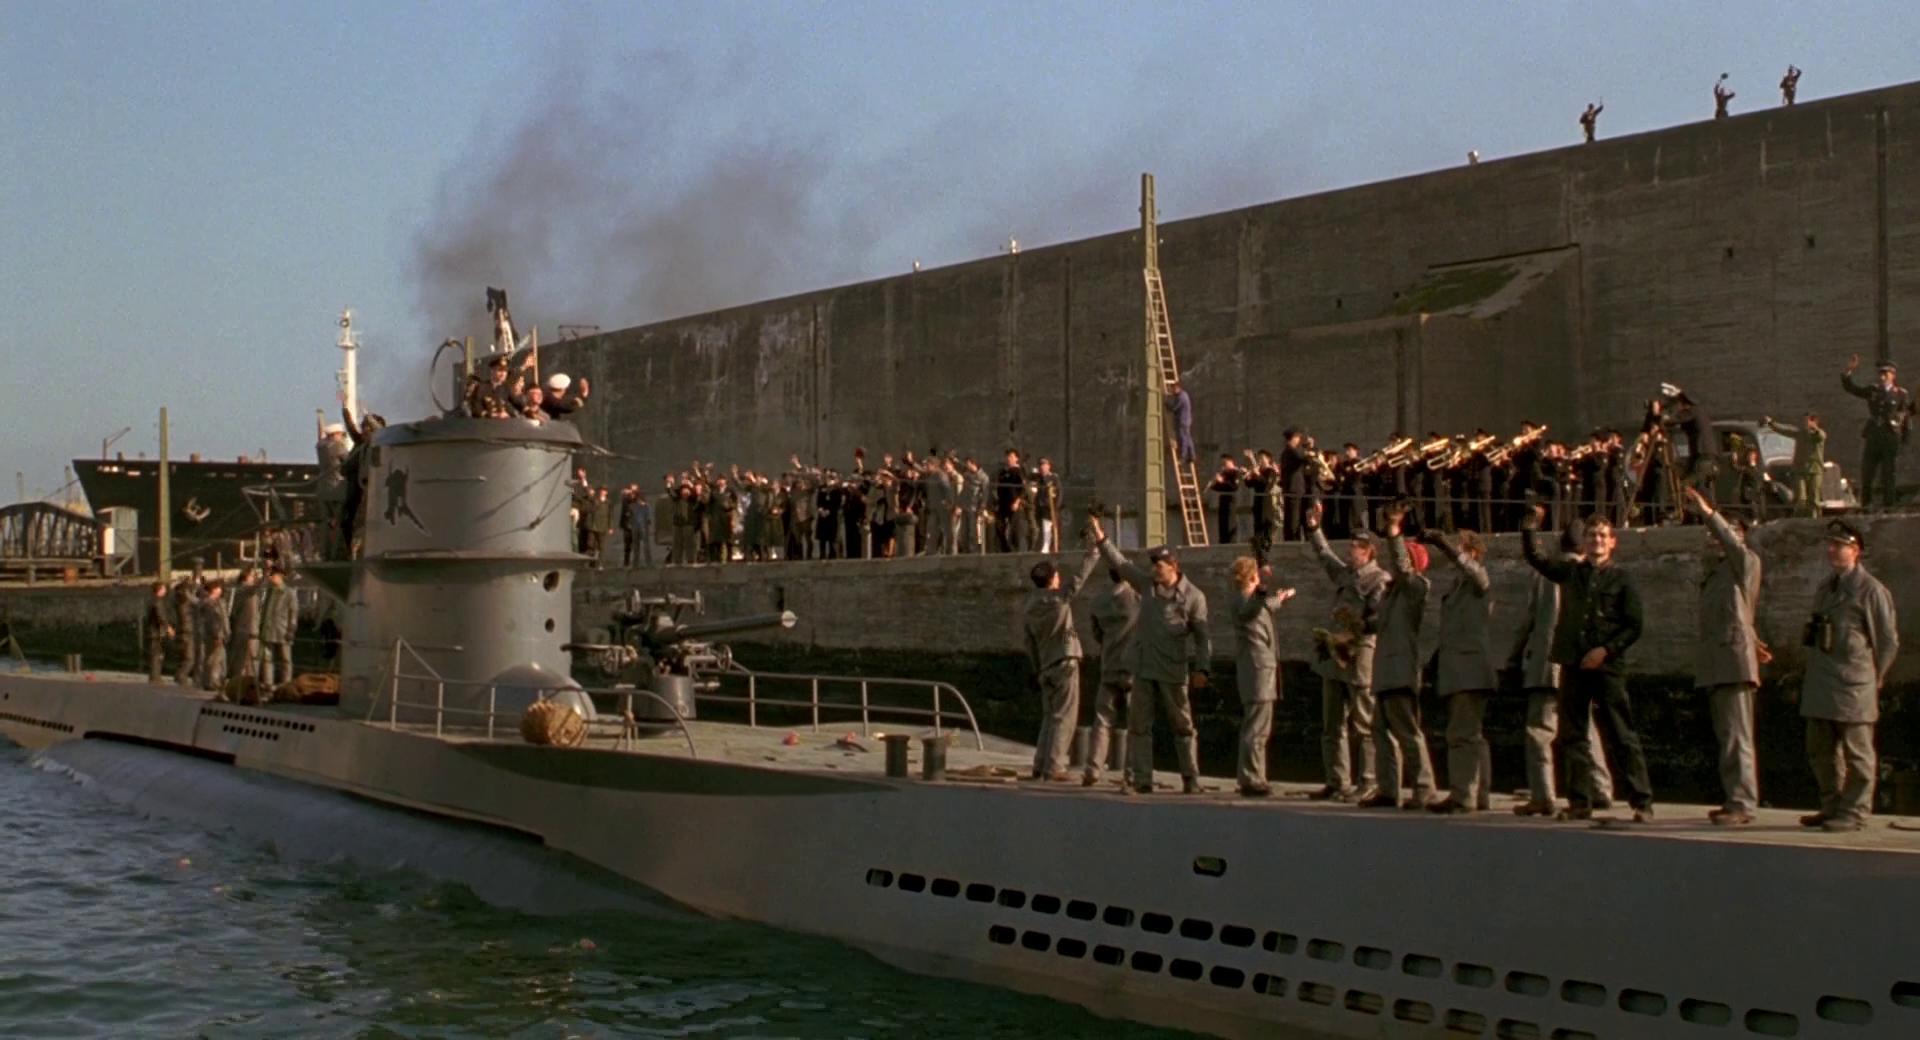 El submarino (Das Boot)  - Fotogramas